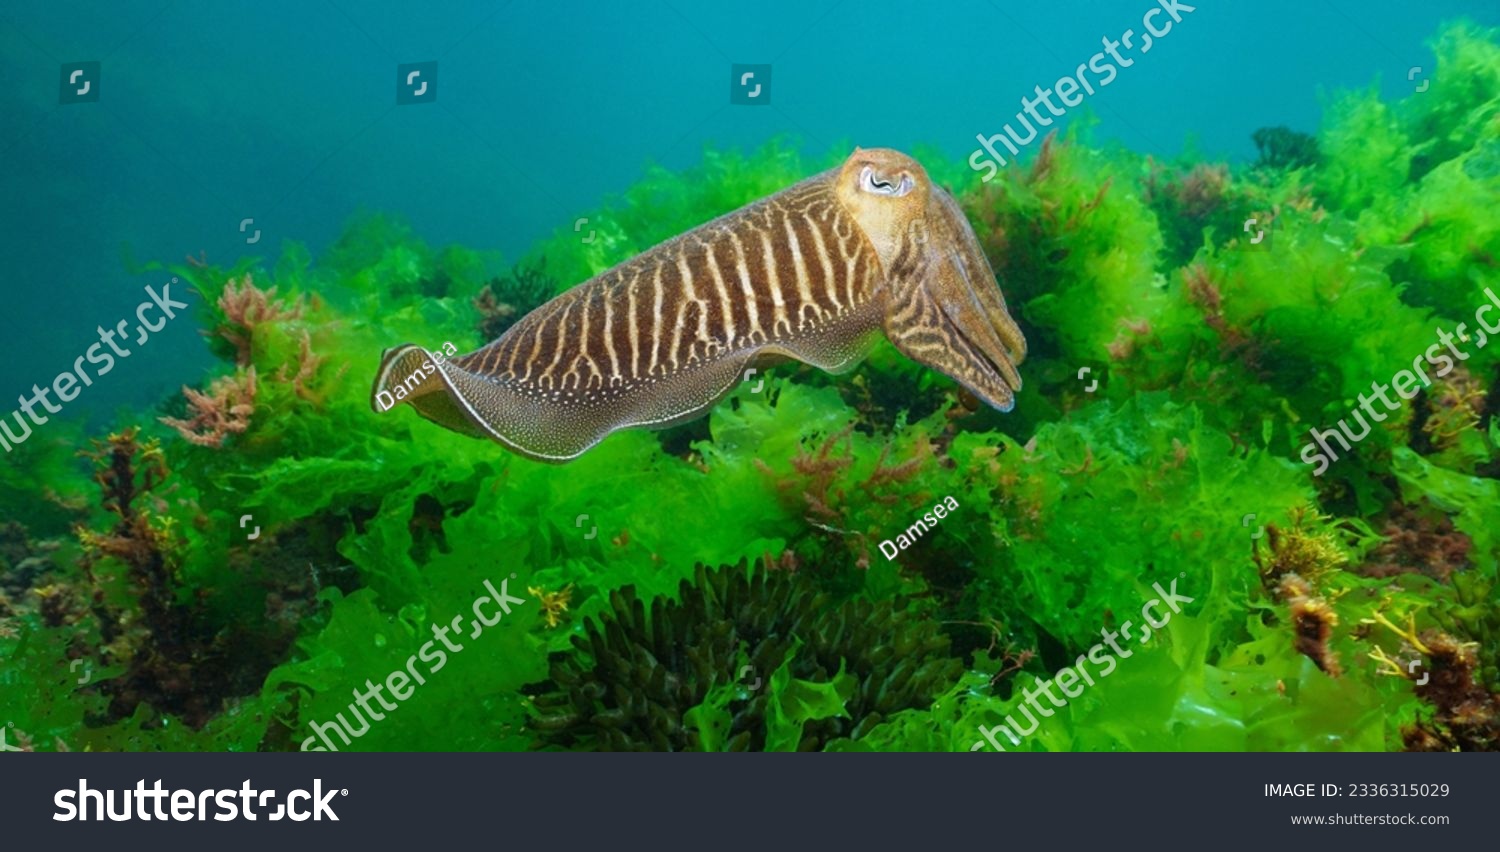 A cuttlefish underwater in the sea (Sepia officinalis, European common cuttlefish) with algae, Atlantic ocean, natural scene, Spain, Galicia #2336315029